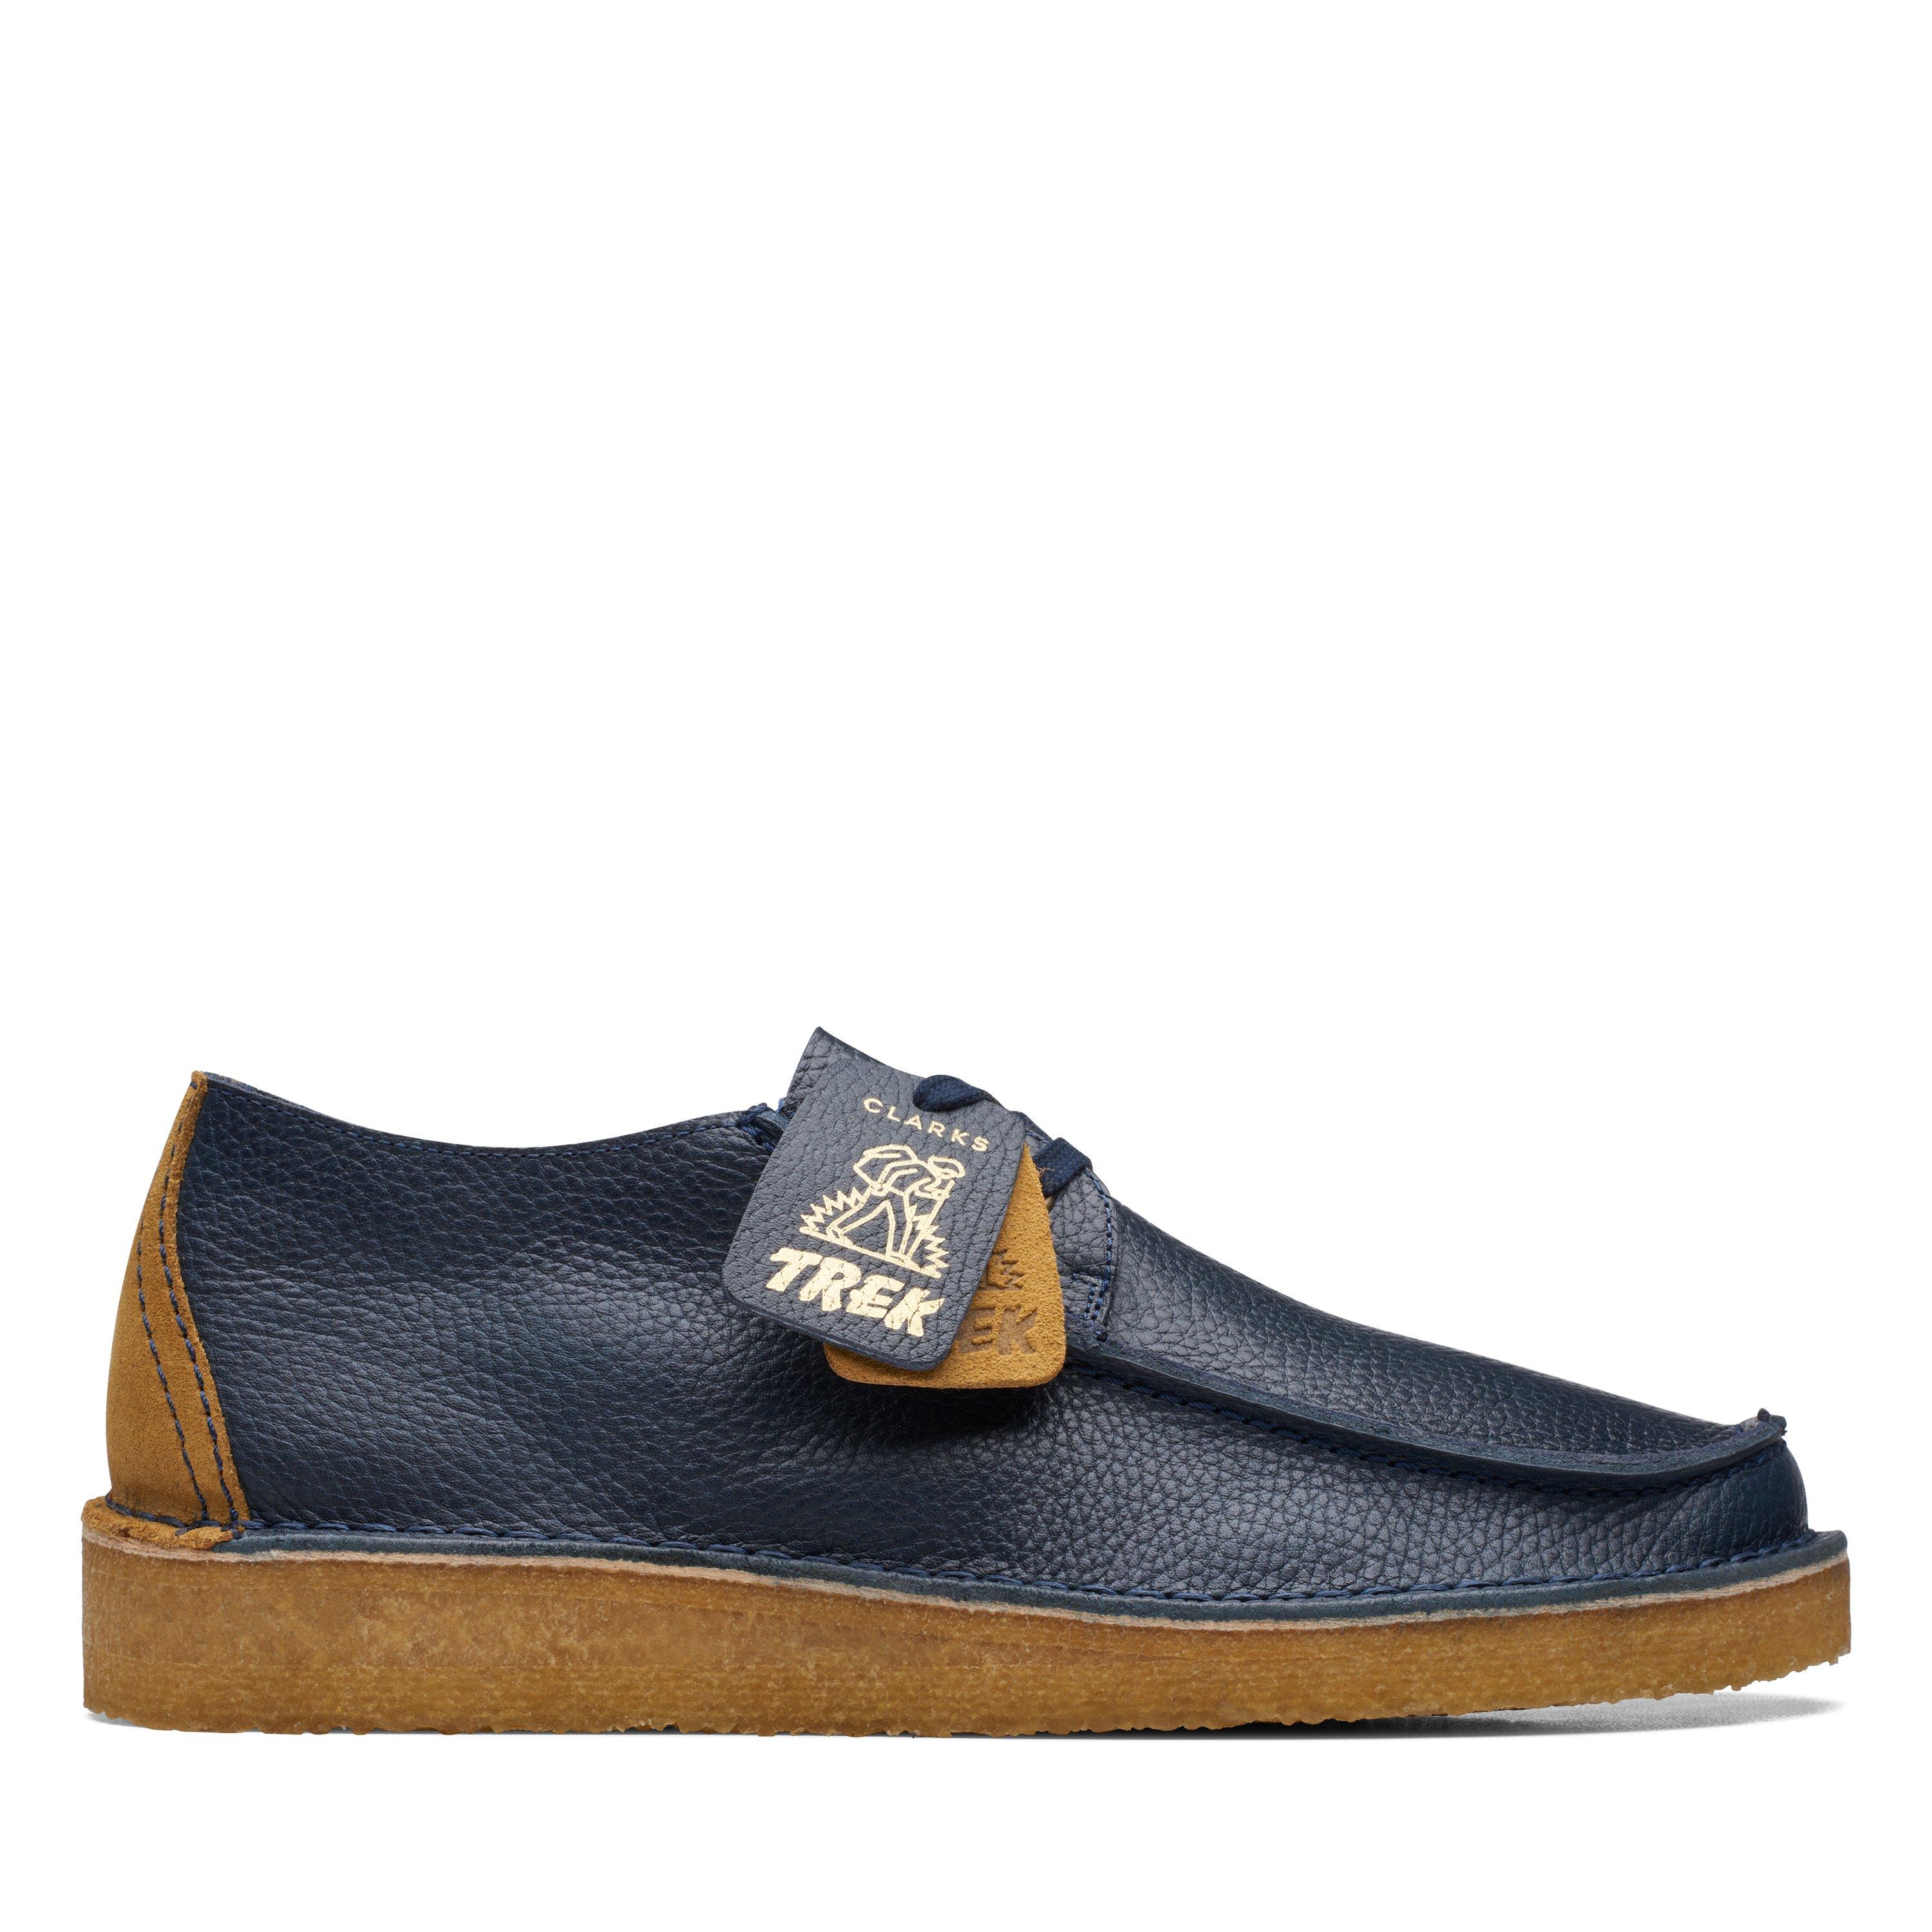 Clarks Originals Mens Seam Trek Blue Leather Casual Shoes